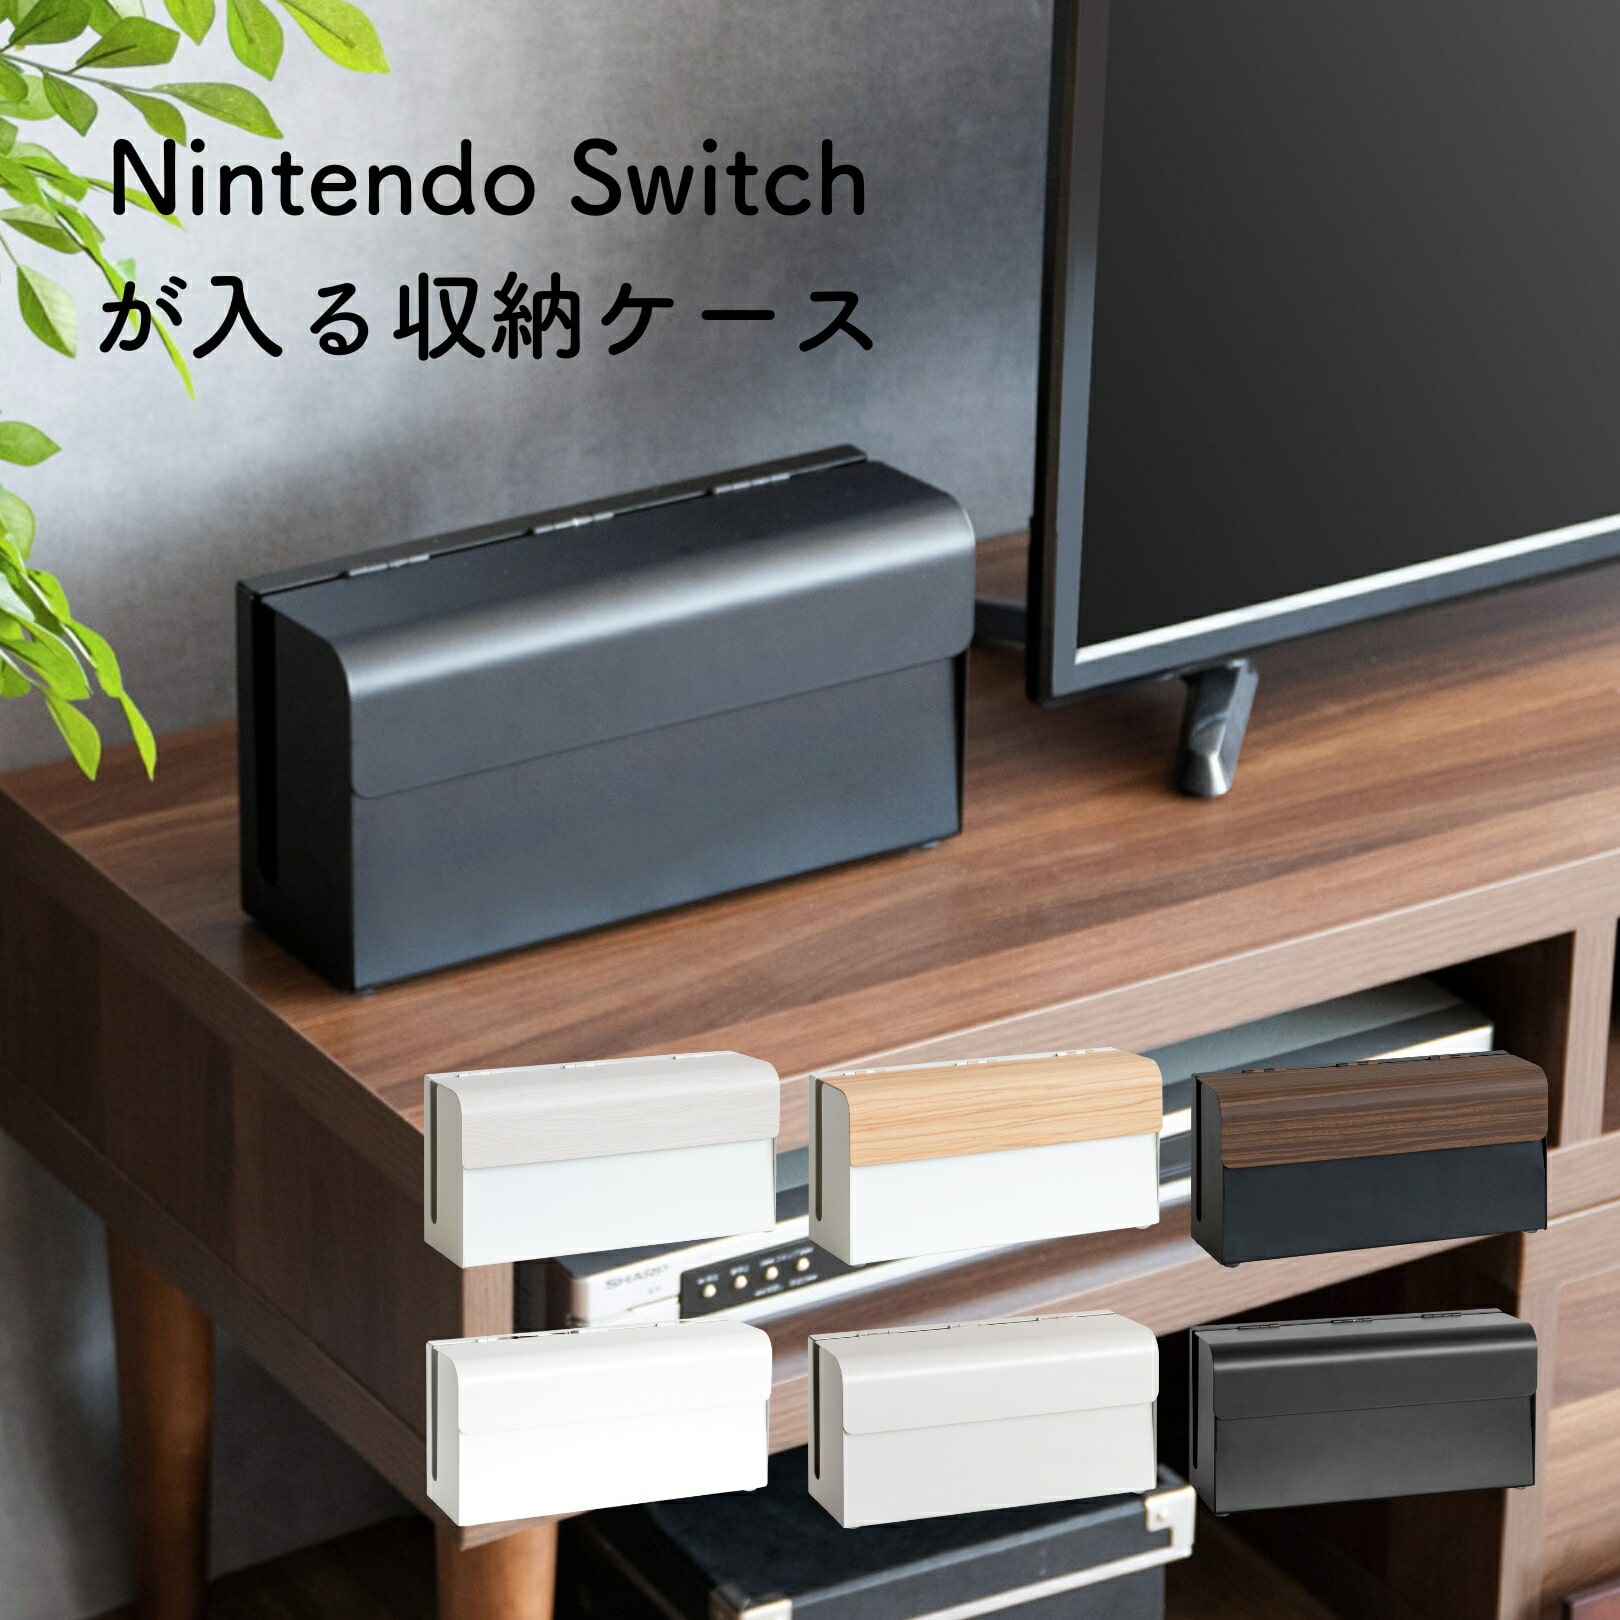 Nintendo Switch用 収納ケース 幅28 奥行9 高さ14cm 宮武製作所 山善ビズコム オフィス用品/家電/屋外家具の通販 山善公式